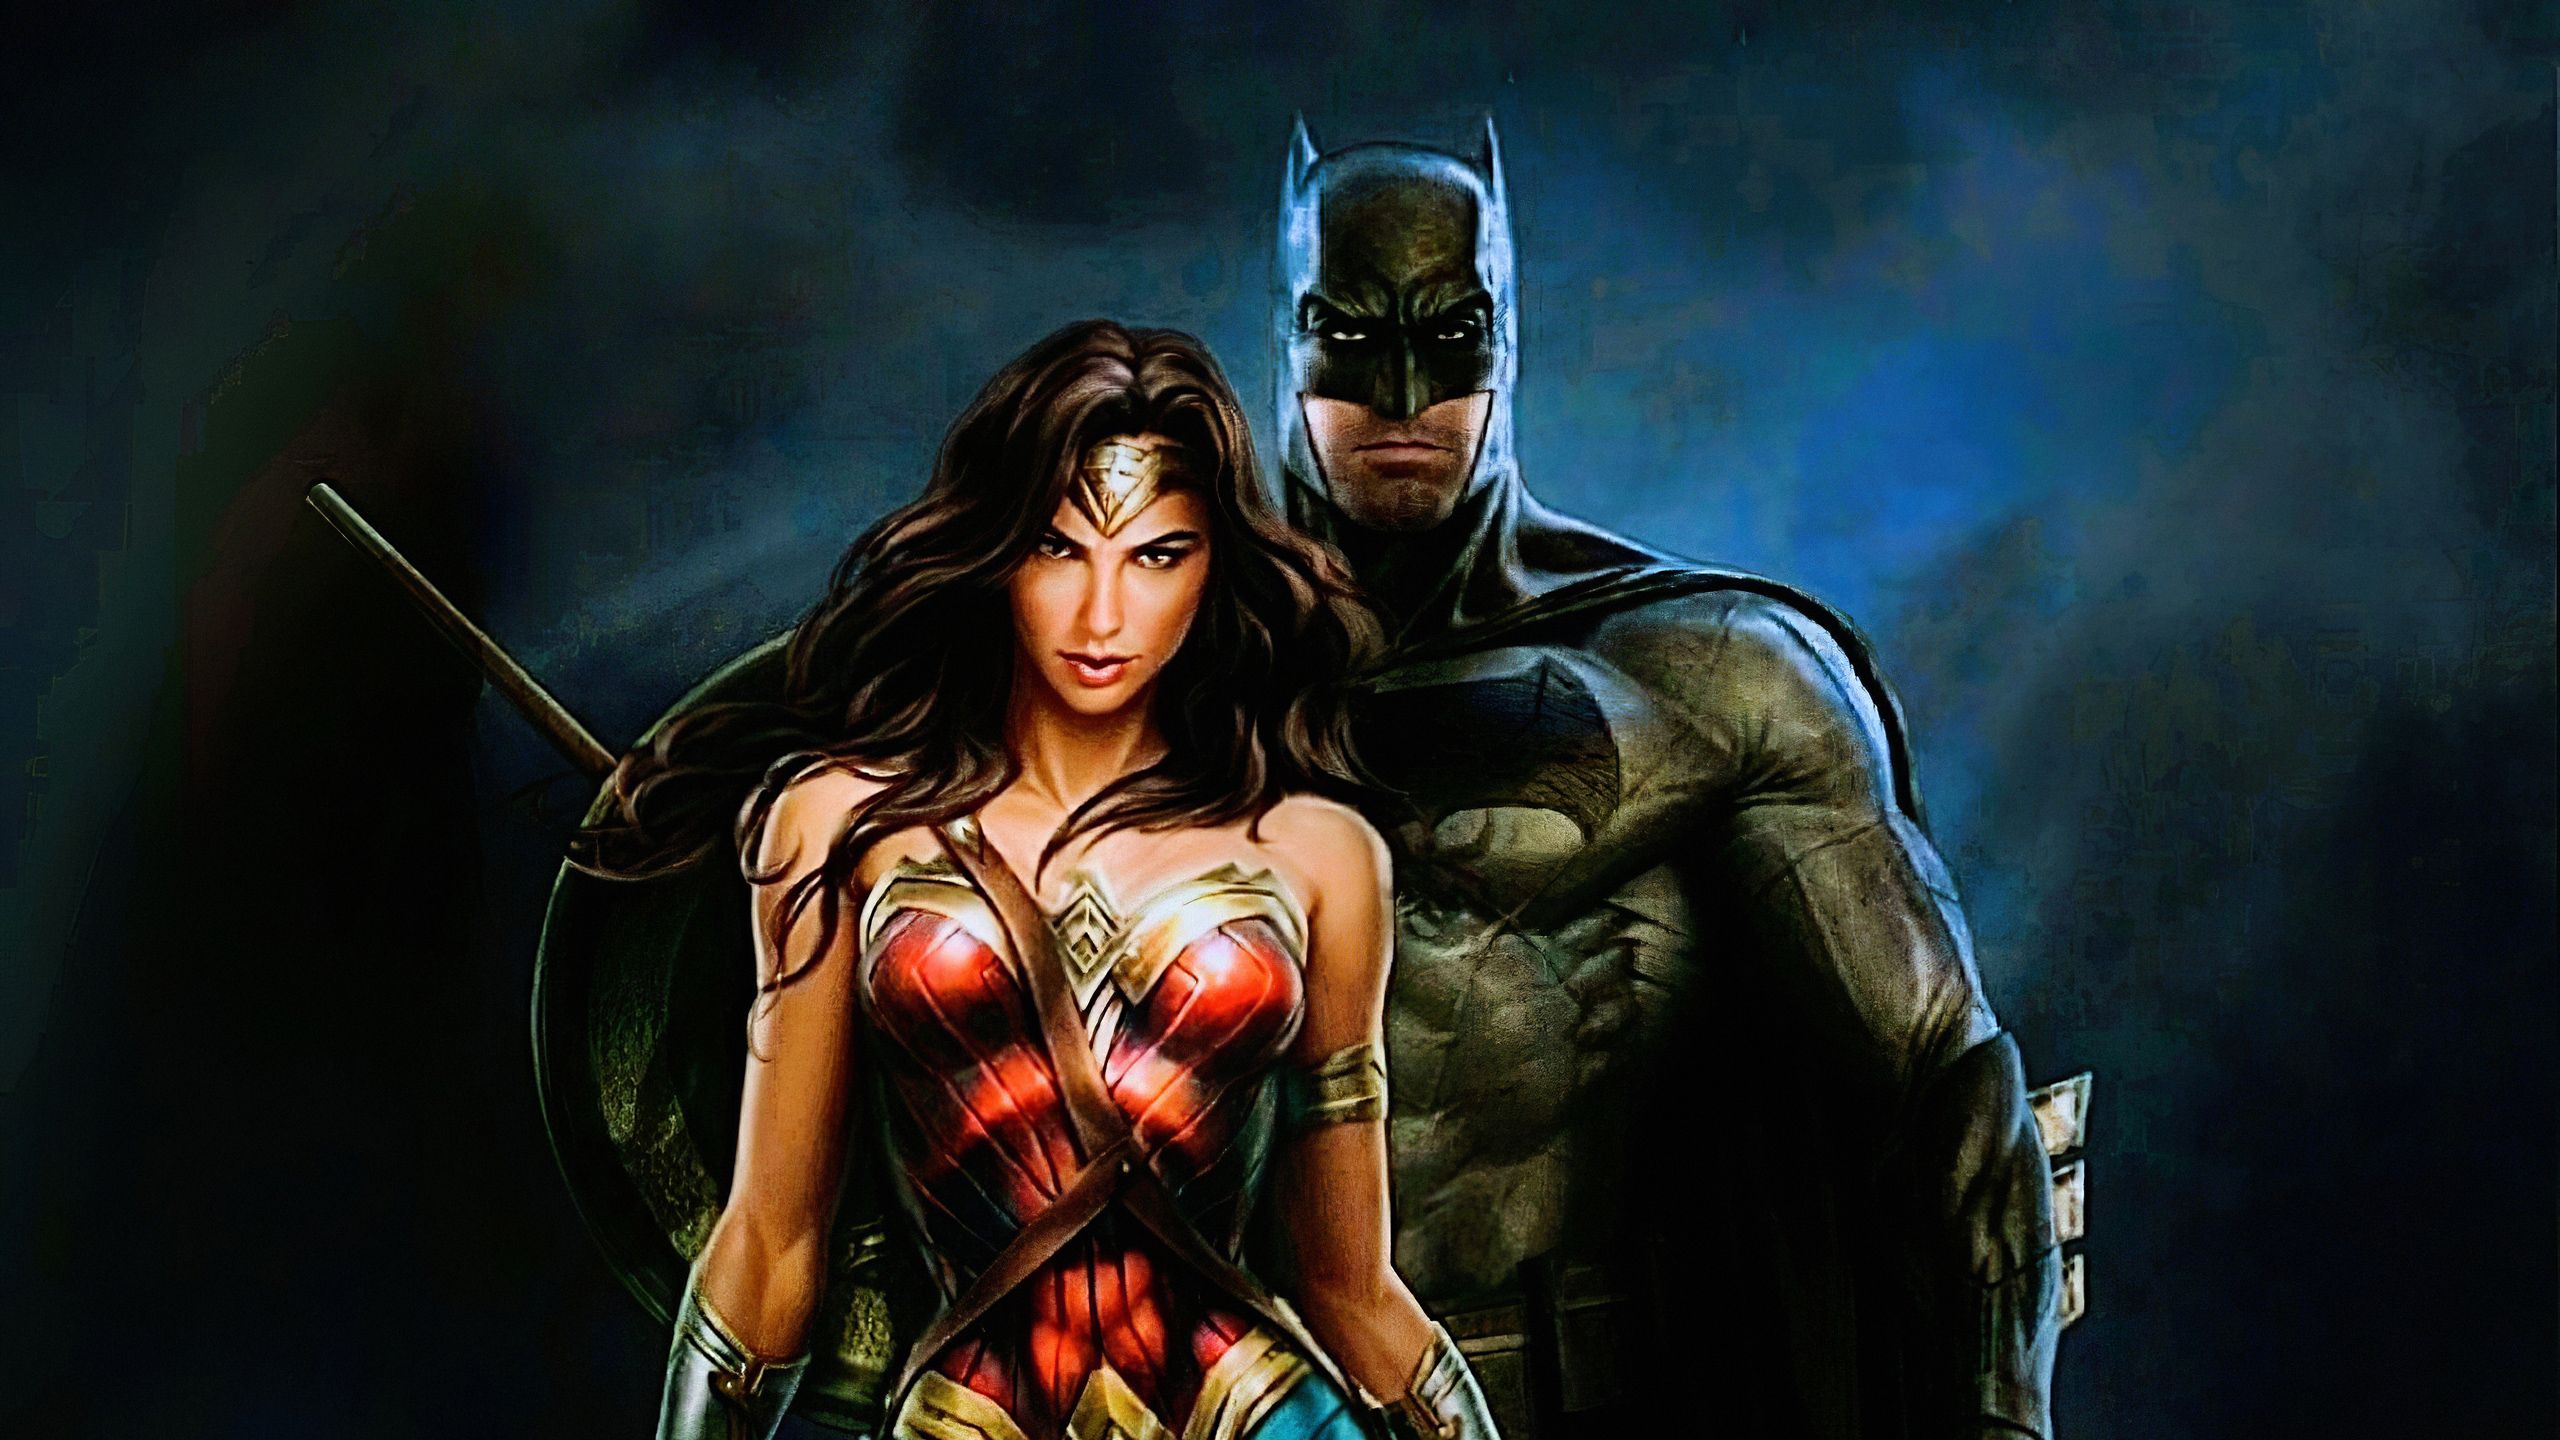 Batman Wonder Woman Art, HD Superheroes, 4k Wallpapers, Image, Backgrounds,...